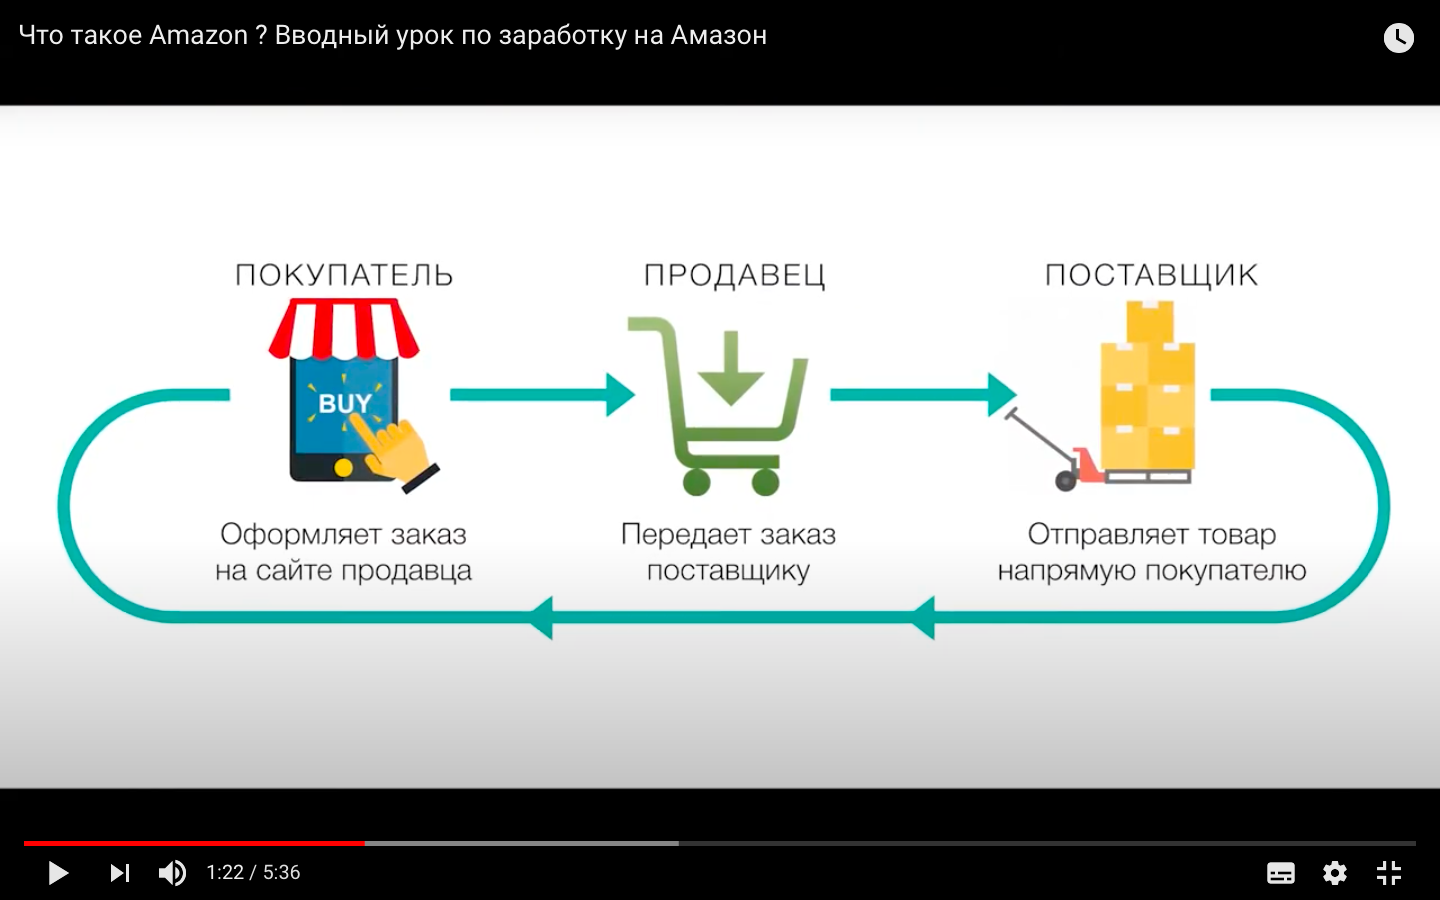 Amazon – Амазон – YouTube – YouTube-video – Vvodniy-urok-po-zarabotku-na-Amazon-YouTube – Вводный-урок-по-заработку-на-Amazon – YouTube-обучалка – что-такое-amazon – вводный урок – урок – заработок – заработок-в-интернете – бизнес – бизнес-идеи – стратегия – сайты – заработок-на-амазон – работа-в-интернете – продажи – товар – услуги – амазмаркетс – amazmarkets – AmazMarkets – seller – селлер – продавец – аккаунт-продавца – seller-account – seller-аккаунт – регистрация – регистрация-аккаунта – товар – данные – товары – апелляция – написать-апелляцию – апелляции – внутренние-скрины – скрины – appeal-letter – appeal – letter – разблокировка – разбан – бан-аккаунта – бан – заморозка – suspension – unlock – ban – administration – items – goods – clients – клиенты – utility-bill – utility-bills – утилити-билл – утилити-биллс – инвойсы – инвойс – invoices – invoice – холд – hold – инструкция - instruction – покупатель – запрос – аккаунт – account – бизнес – онлайн-бизнес – e-commerce – buyer – customer – client – document – documents – request – seller-account – Amazon-account – optimization – advertising – CEO – информация